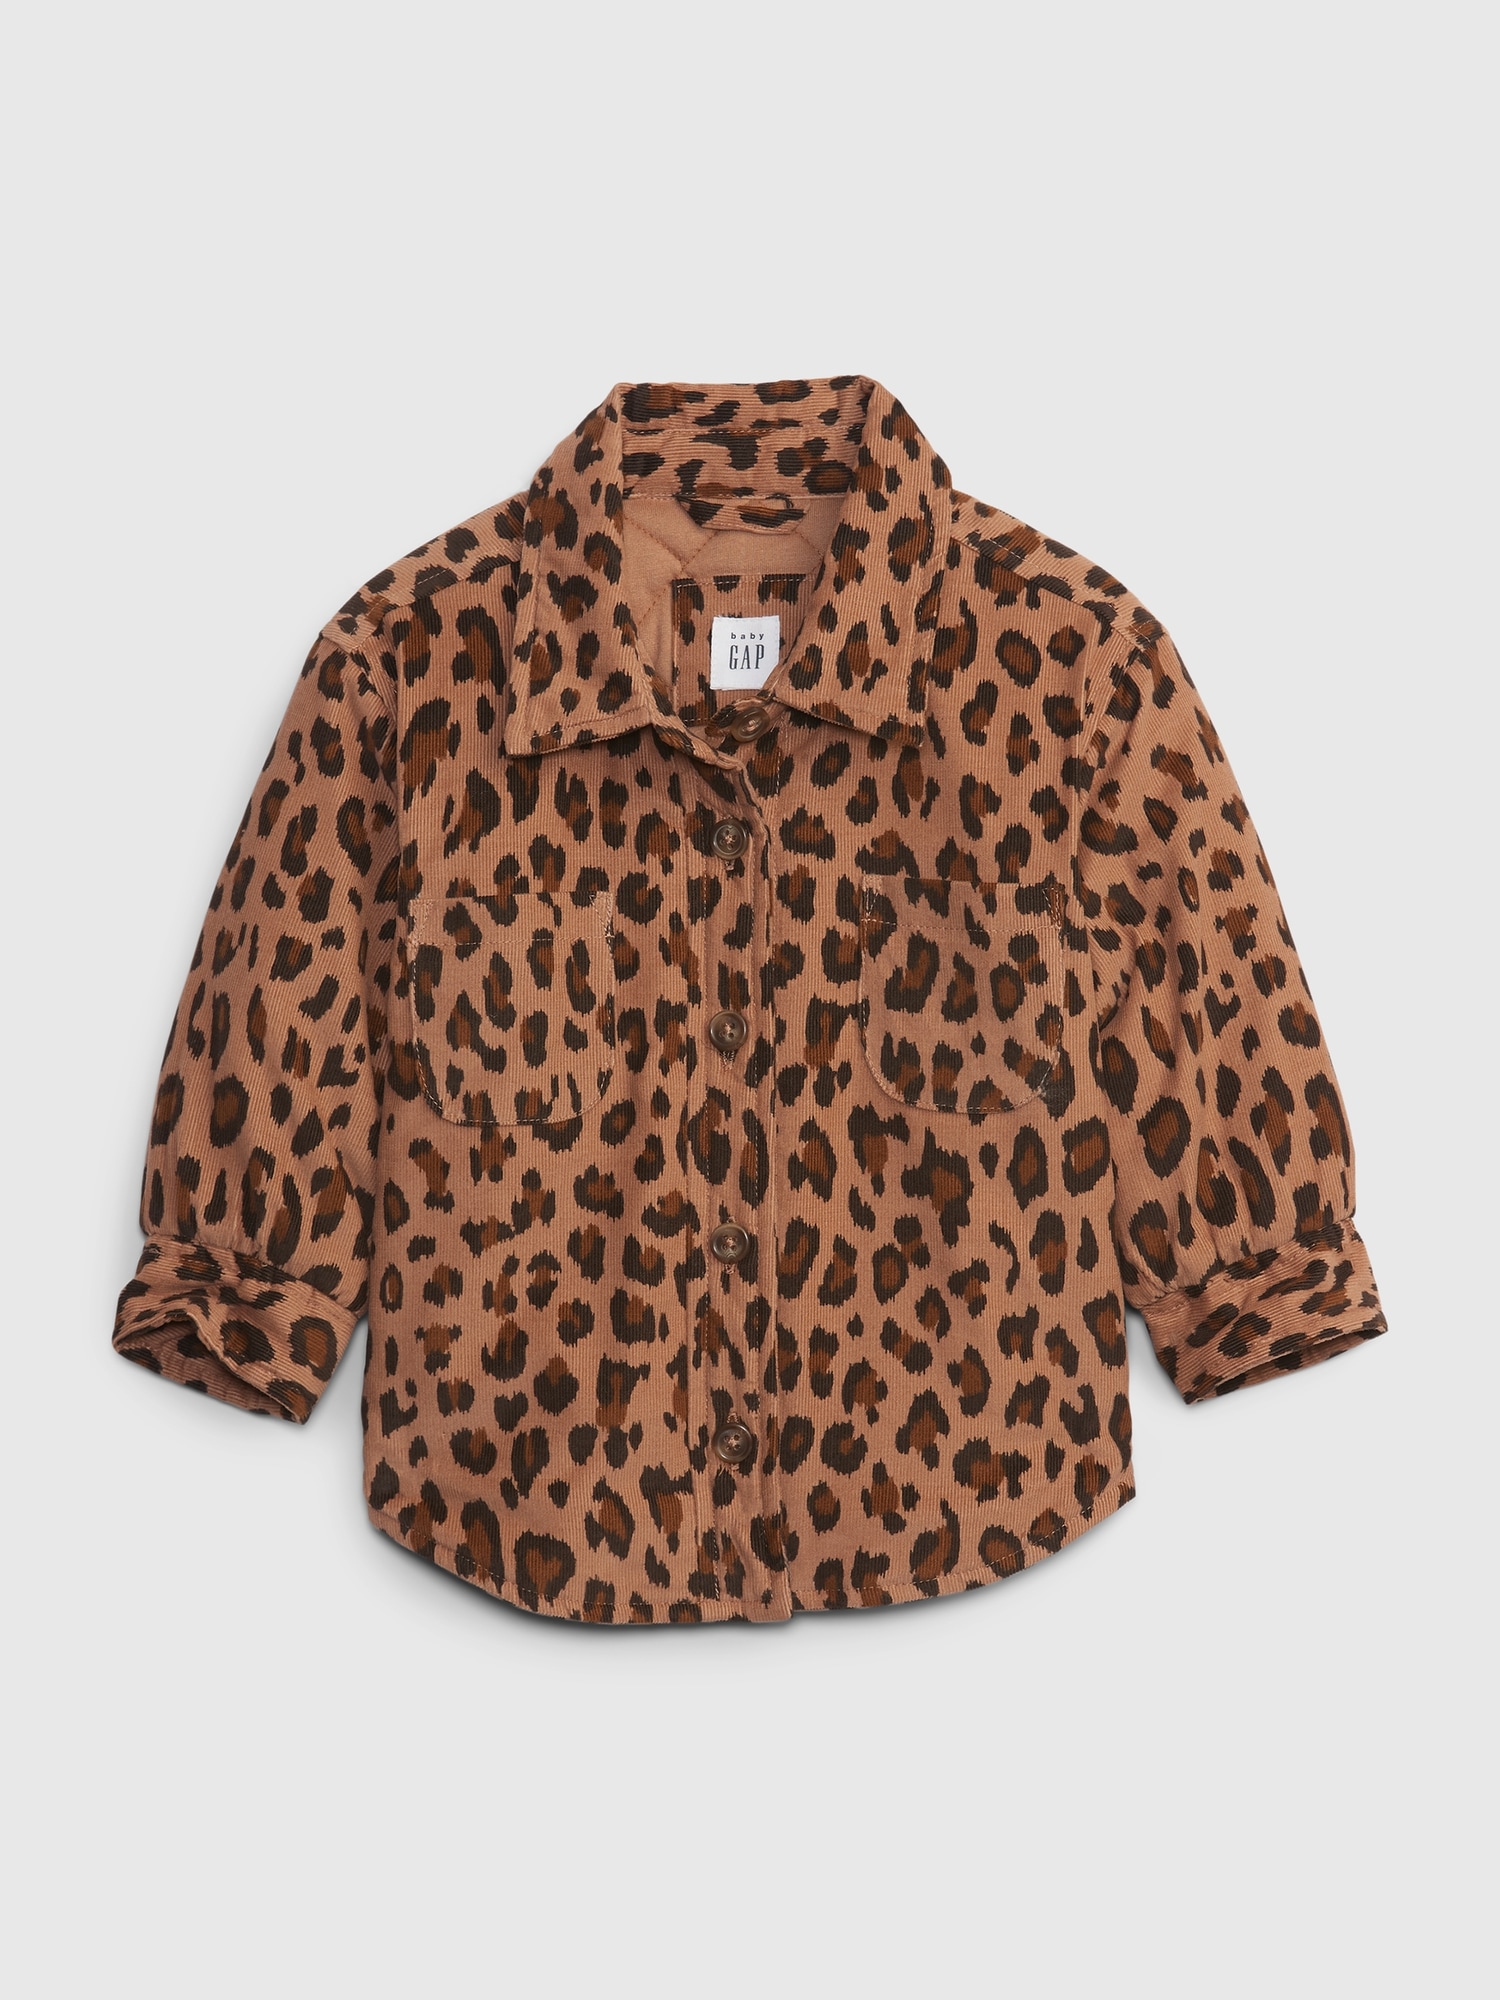 Gap Baby Leopard Shirt Jacket